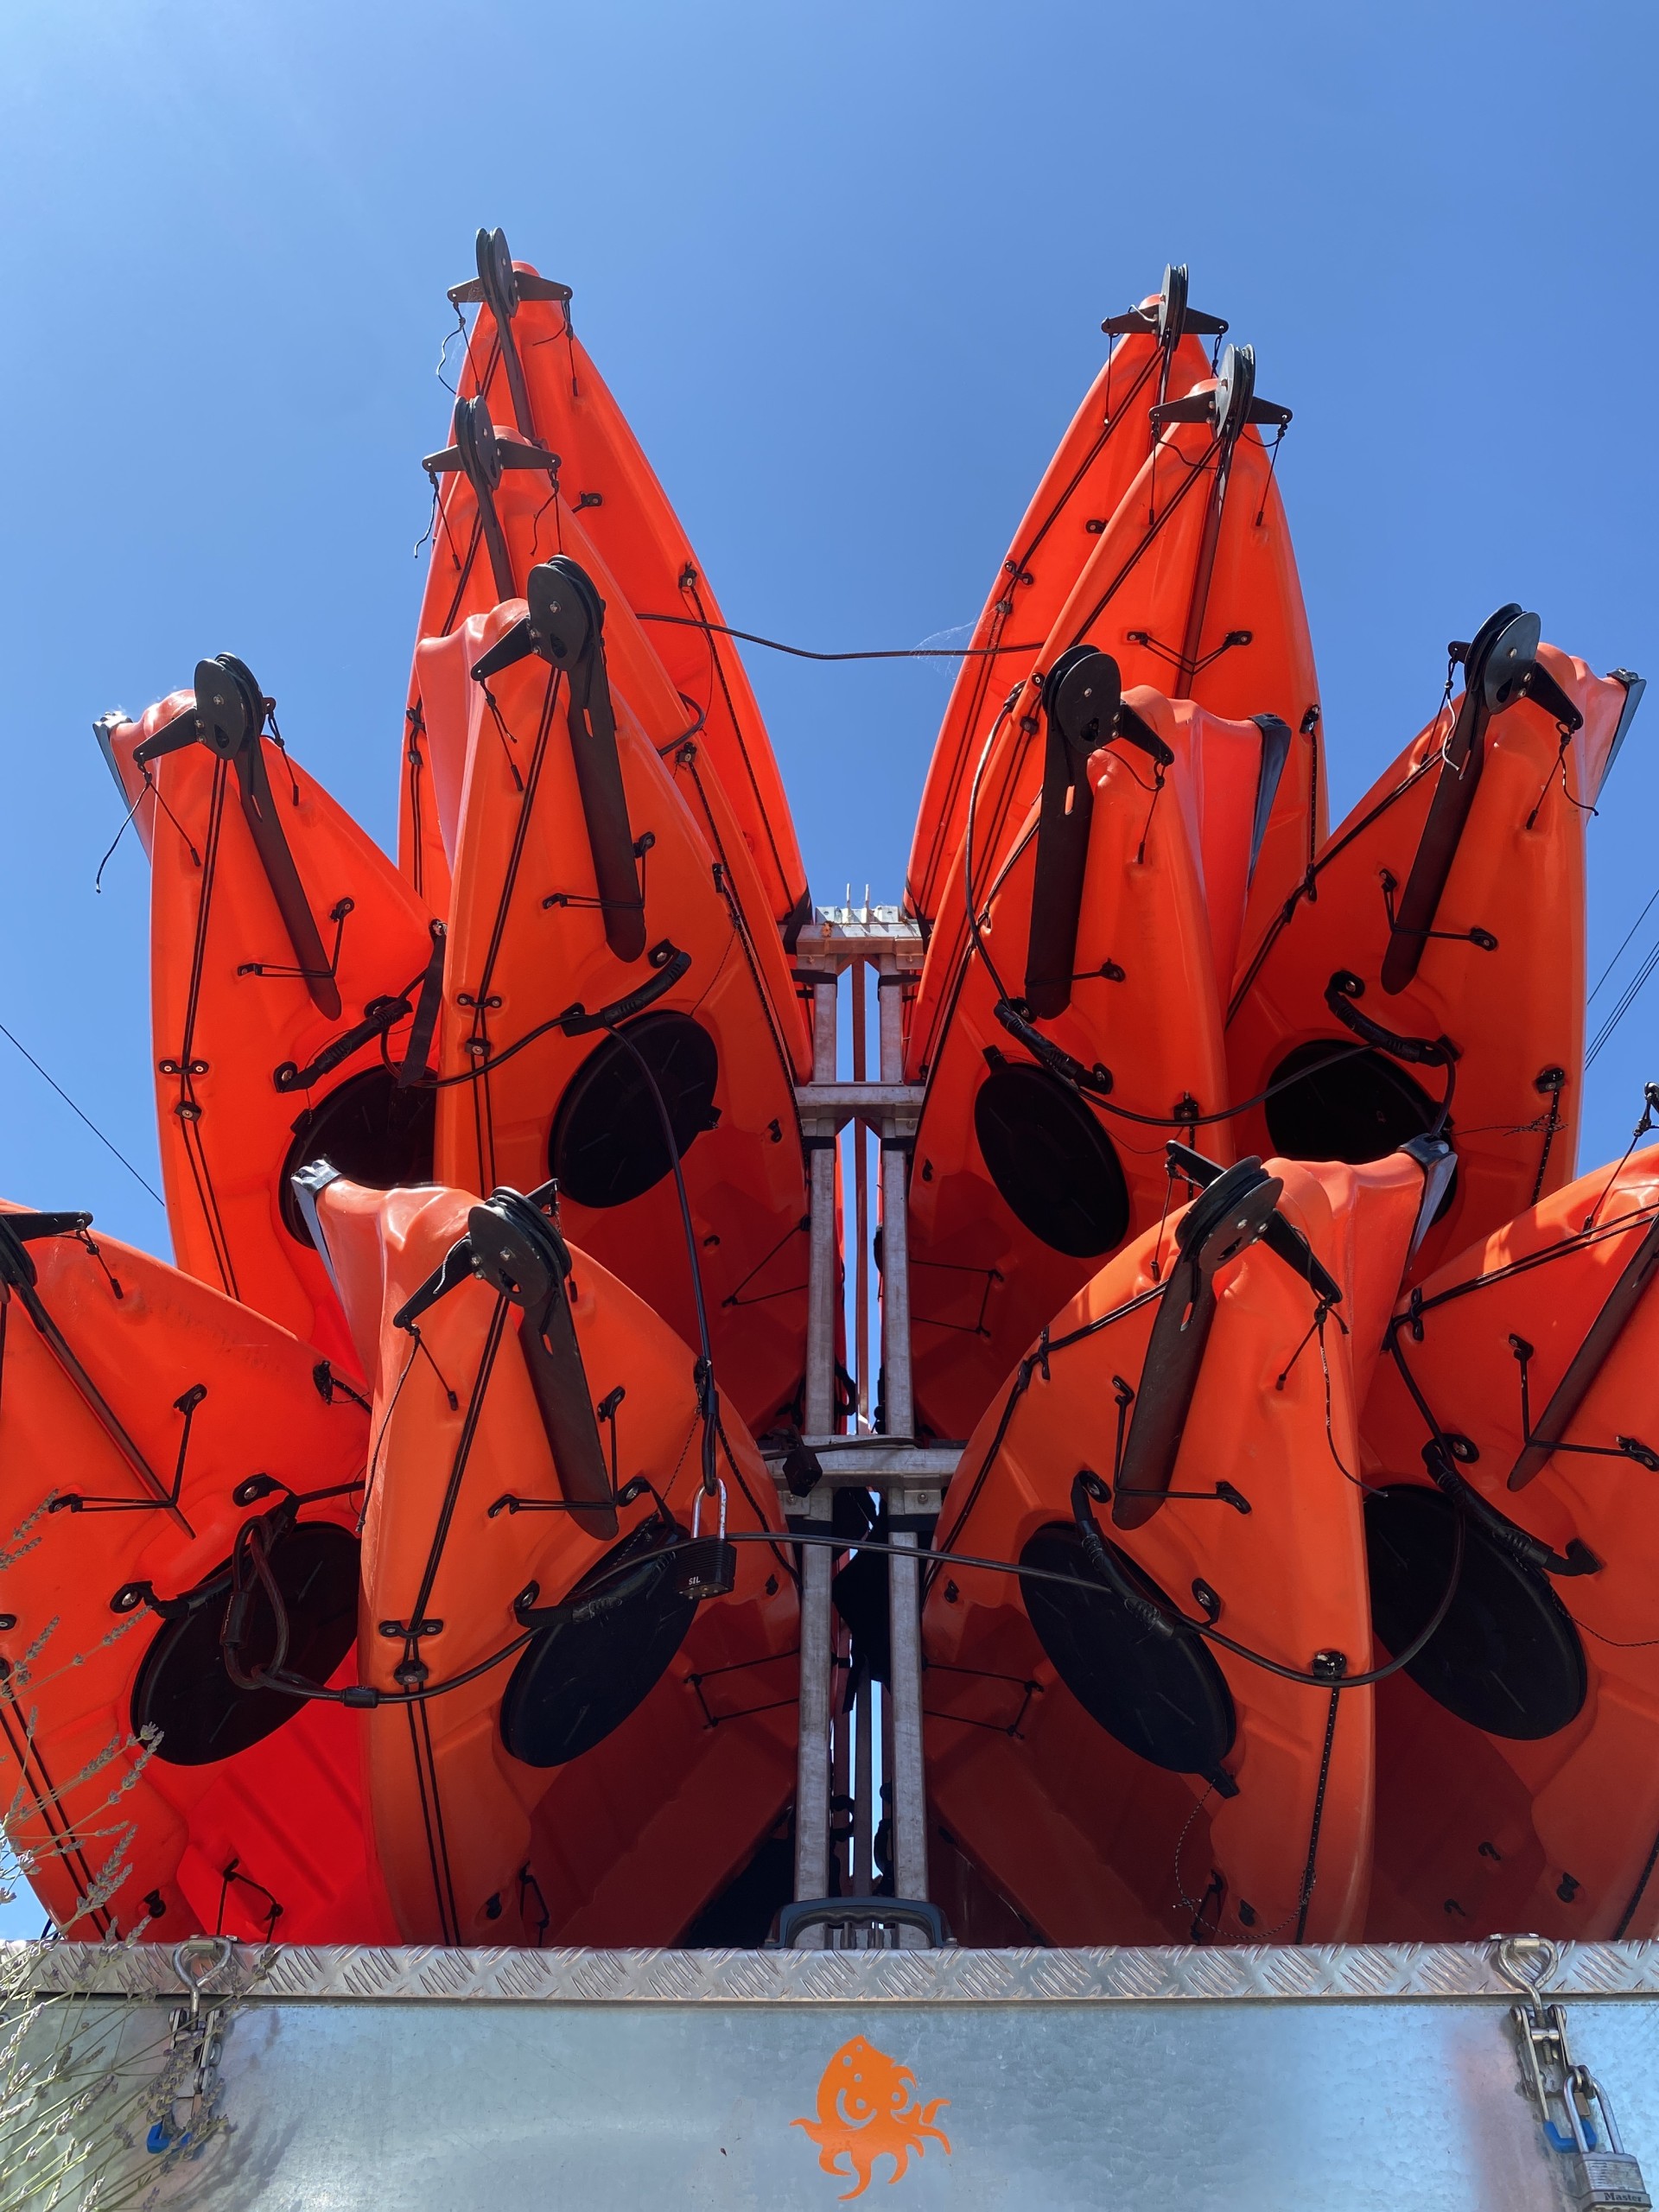 Orange sit-on-top kayaks on a trailer with NOMAD Sea Kayaking.